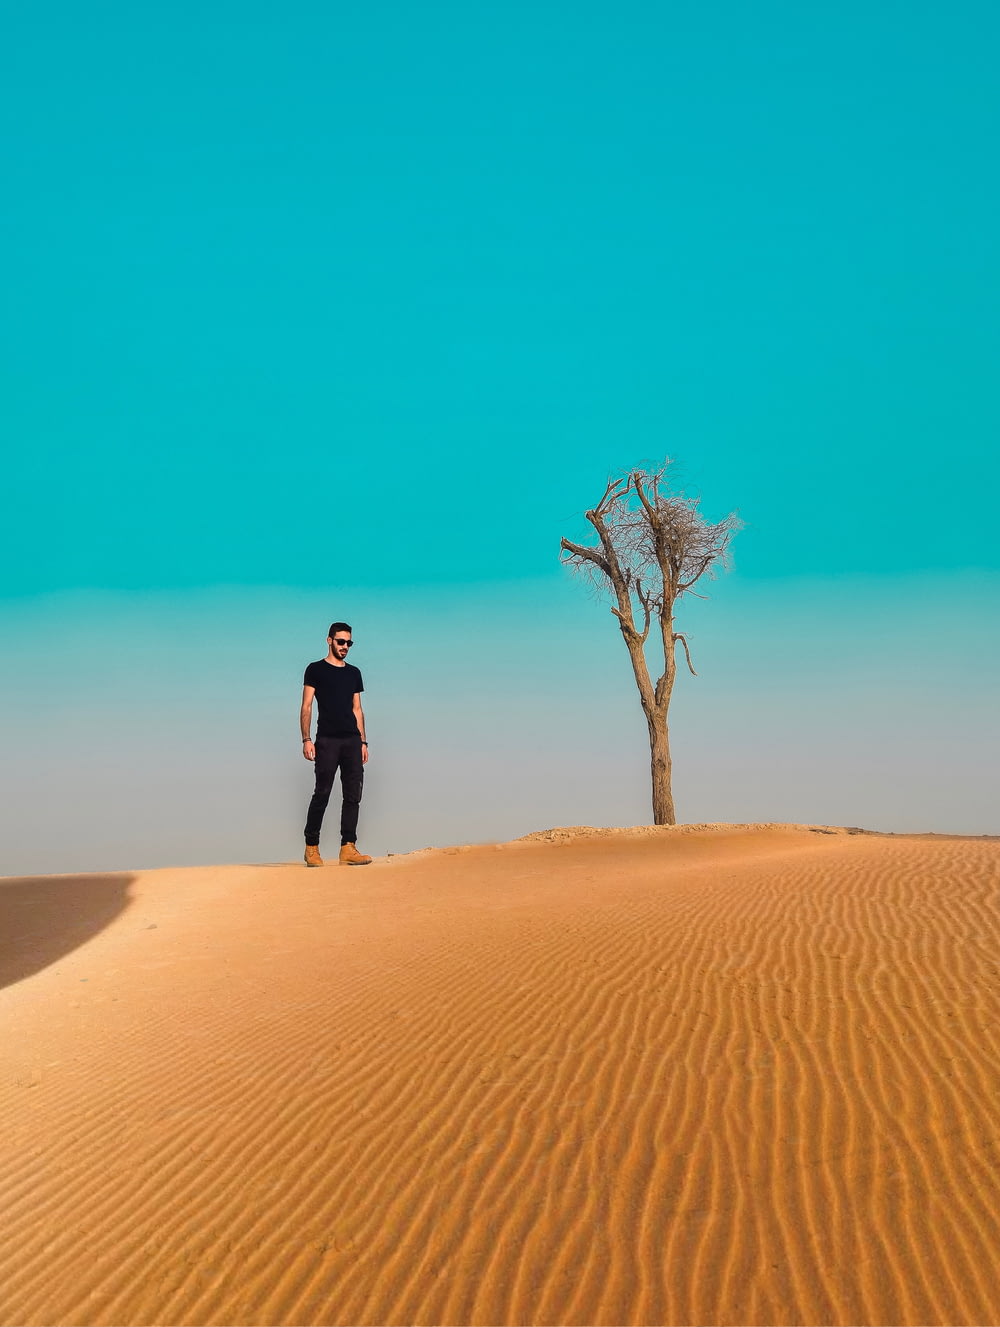 man standing on sand field near dried tree